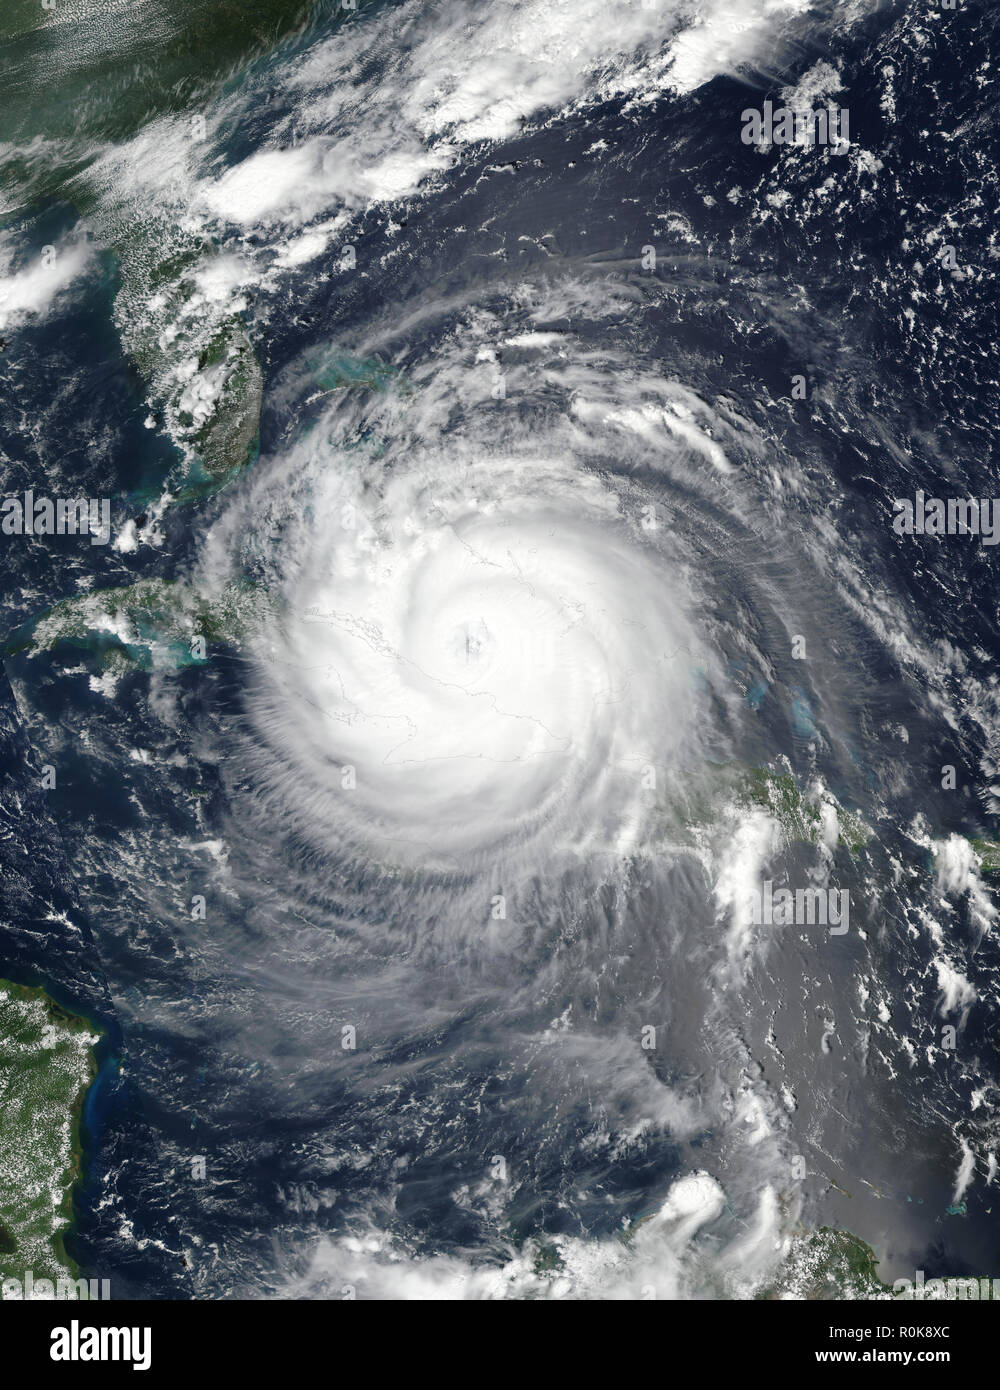 Uragano Irma oltre alle Bahamas e Cuba. Foto Stock